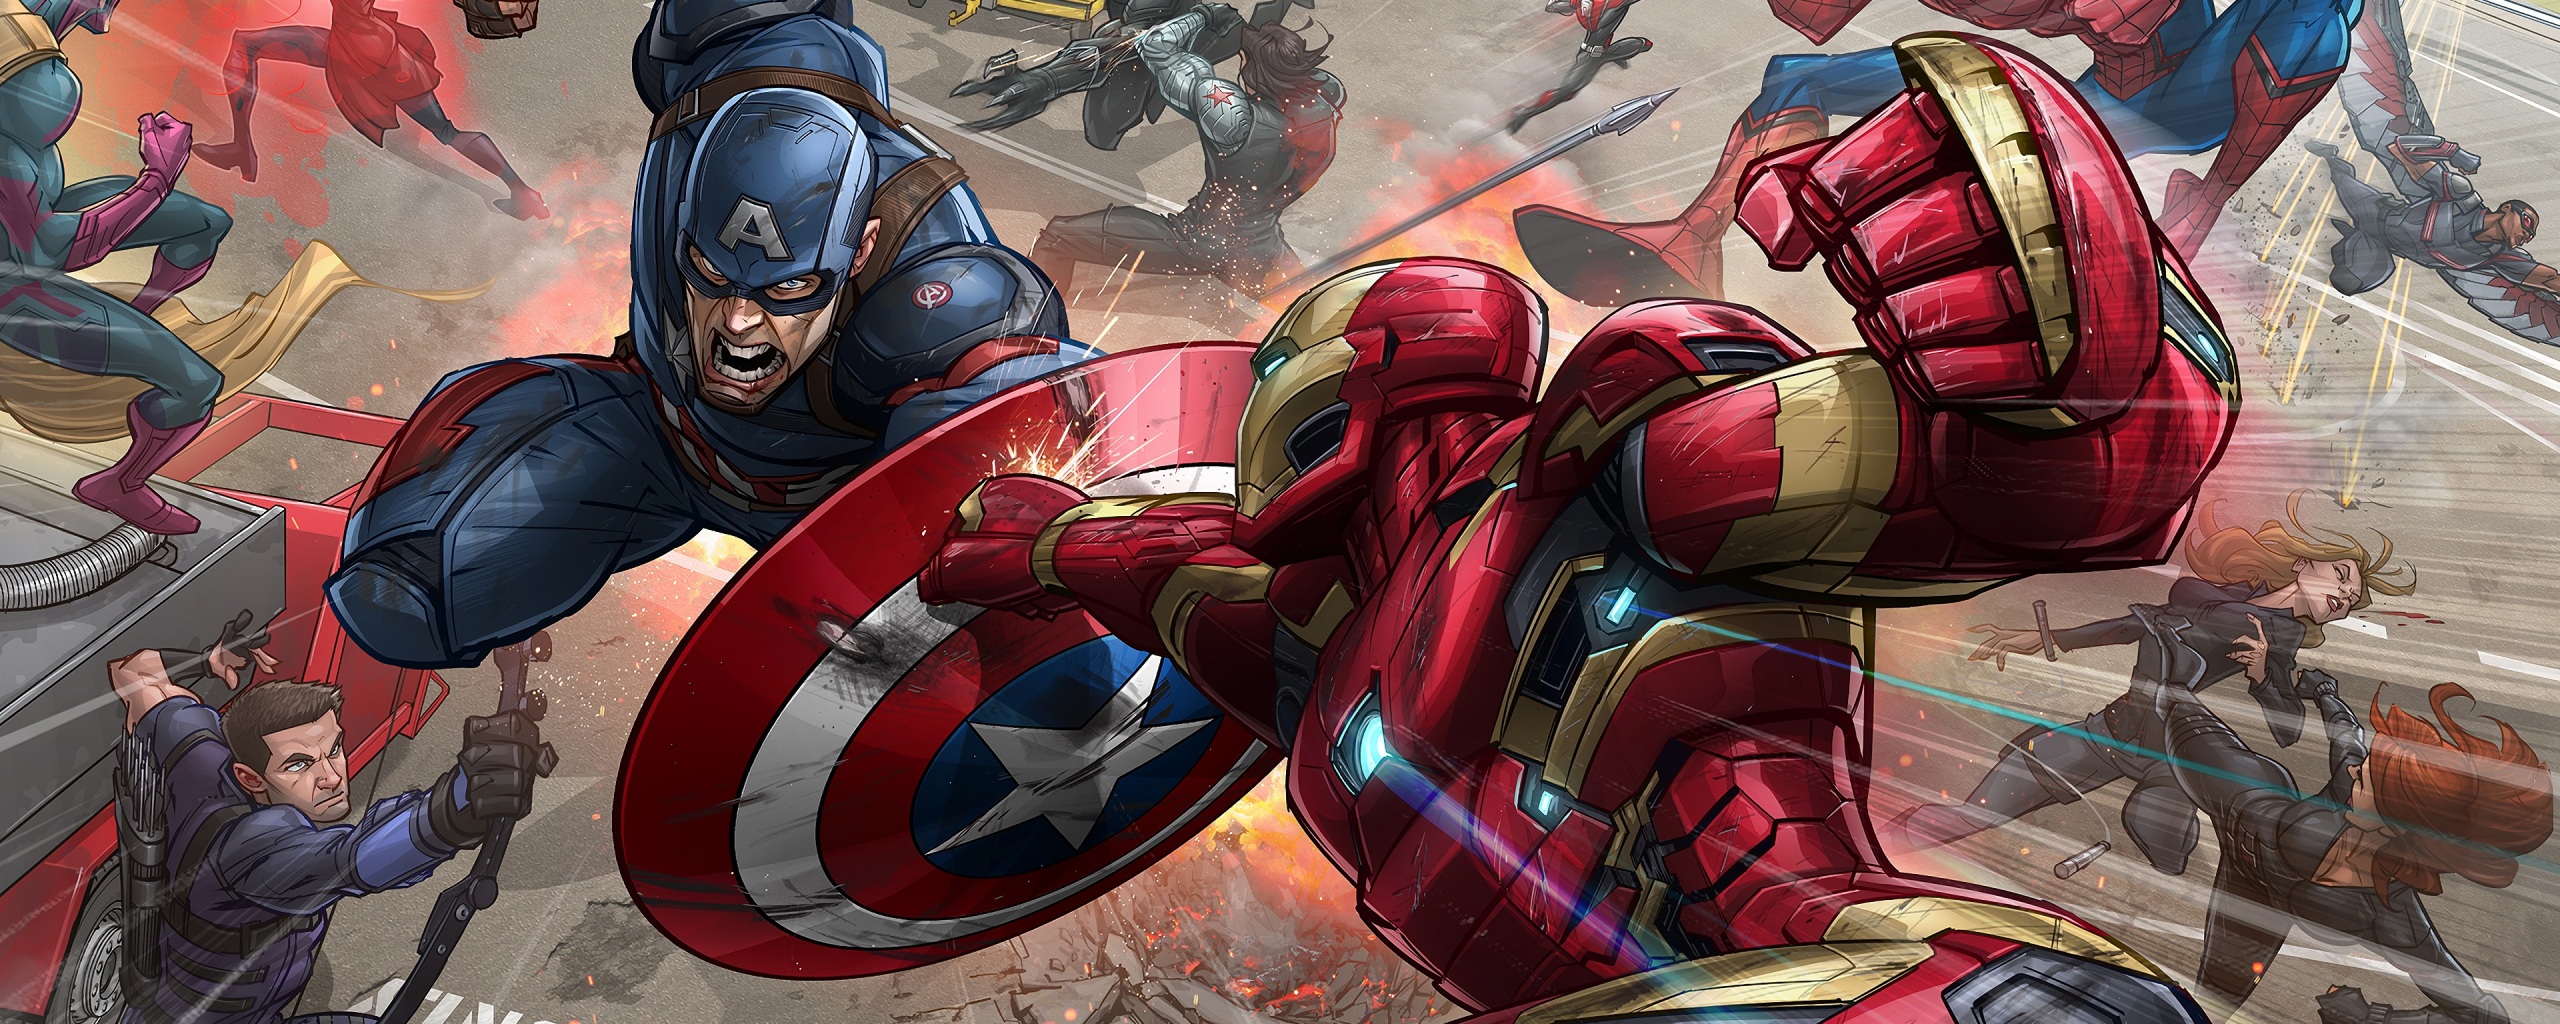 Wallpaper 4k Iron Man Captain America Fight Marvel Comics 4K